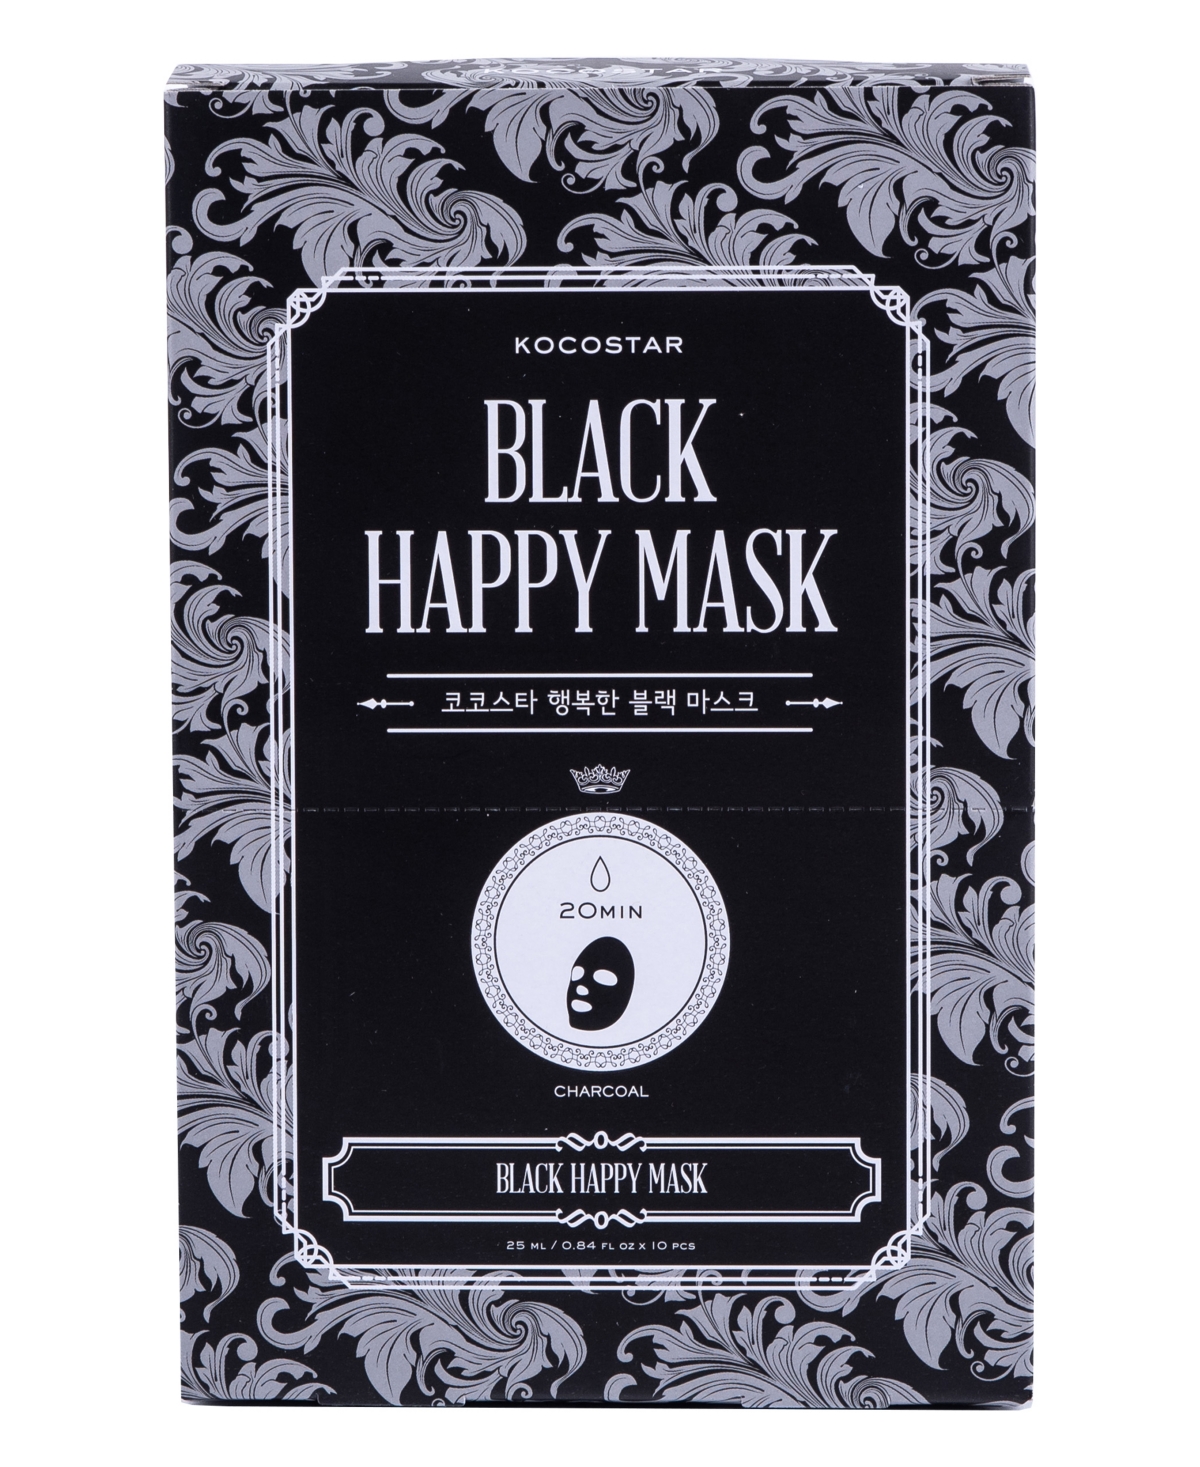 Black Happy Mask, 10-Pk. - Black